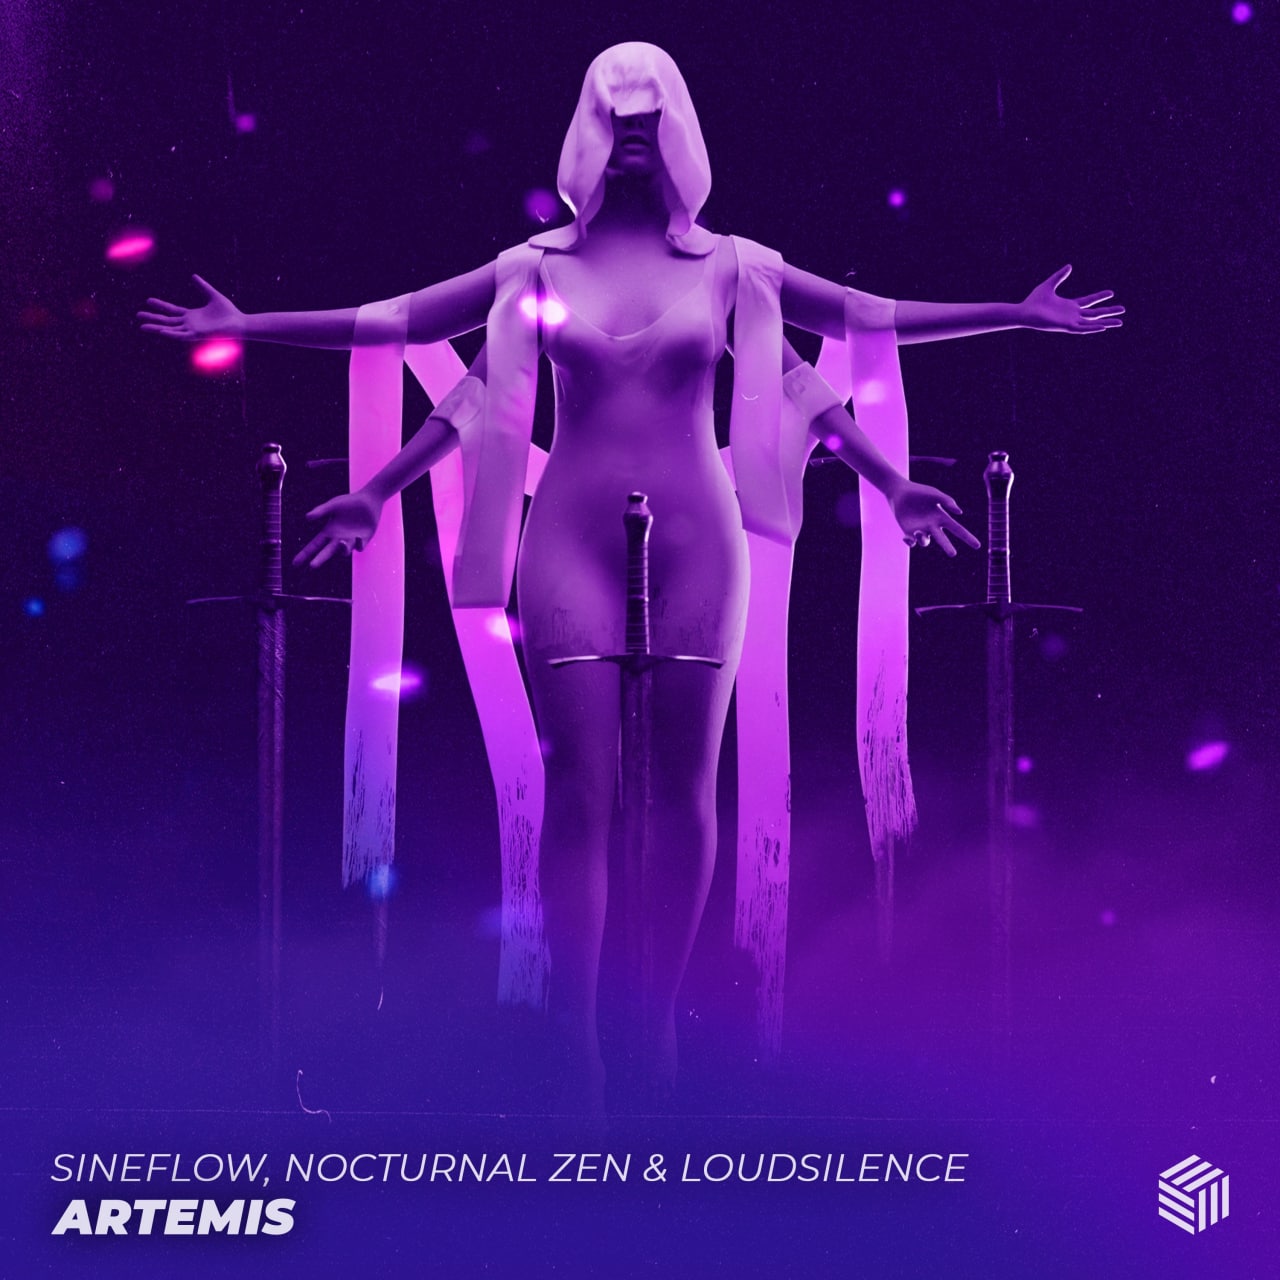 Sineflow, Nocturnal Zen & Loudsilence - Artemis (Extended Mix)